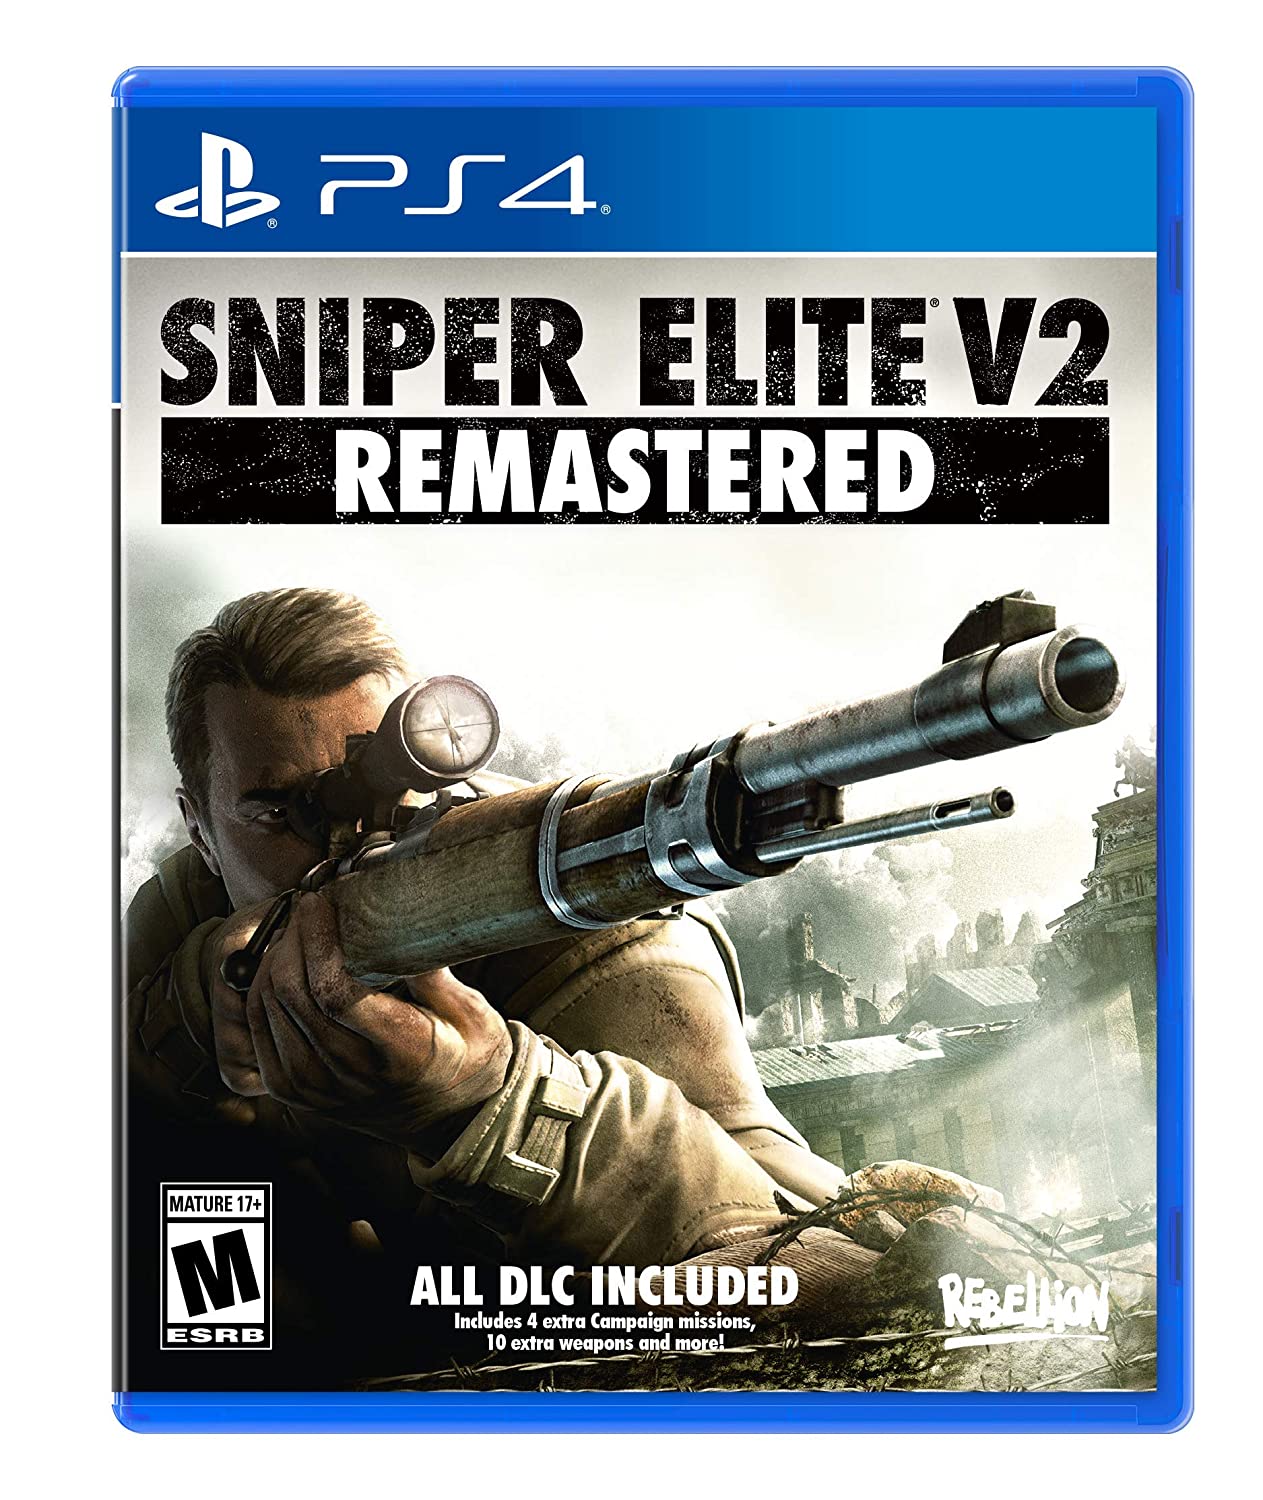 Sniper Elite V2 Remastered (Nintendo Switch)